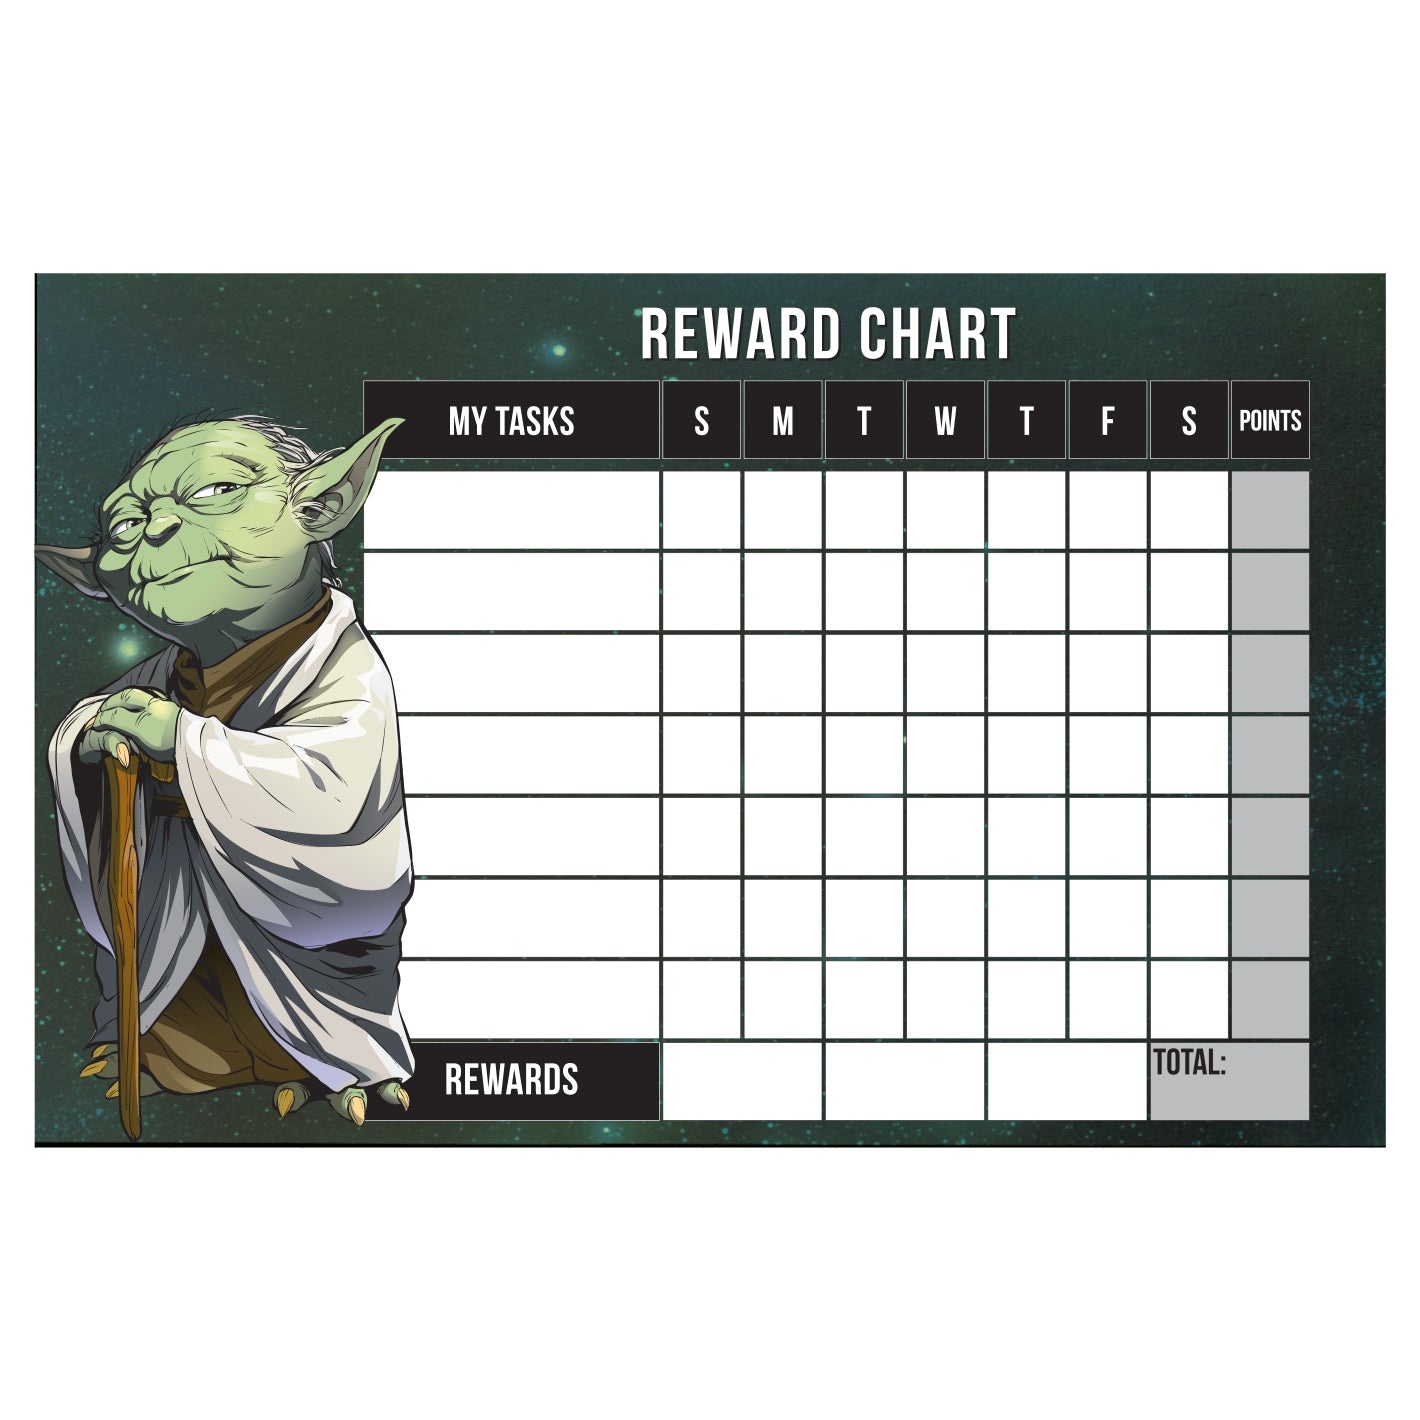 Sticker Star Wars Yoda 14721h